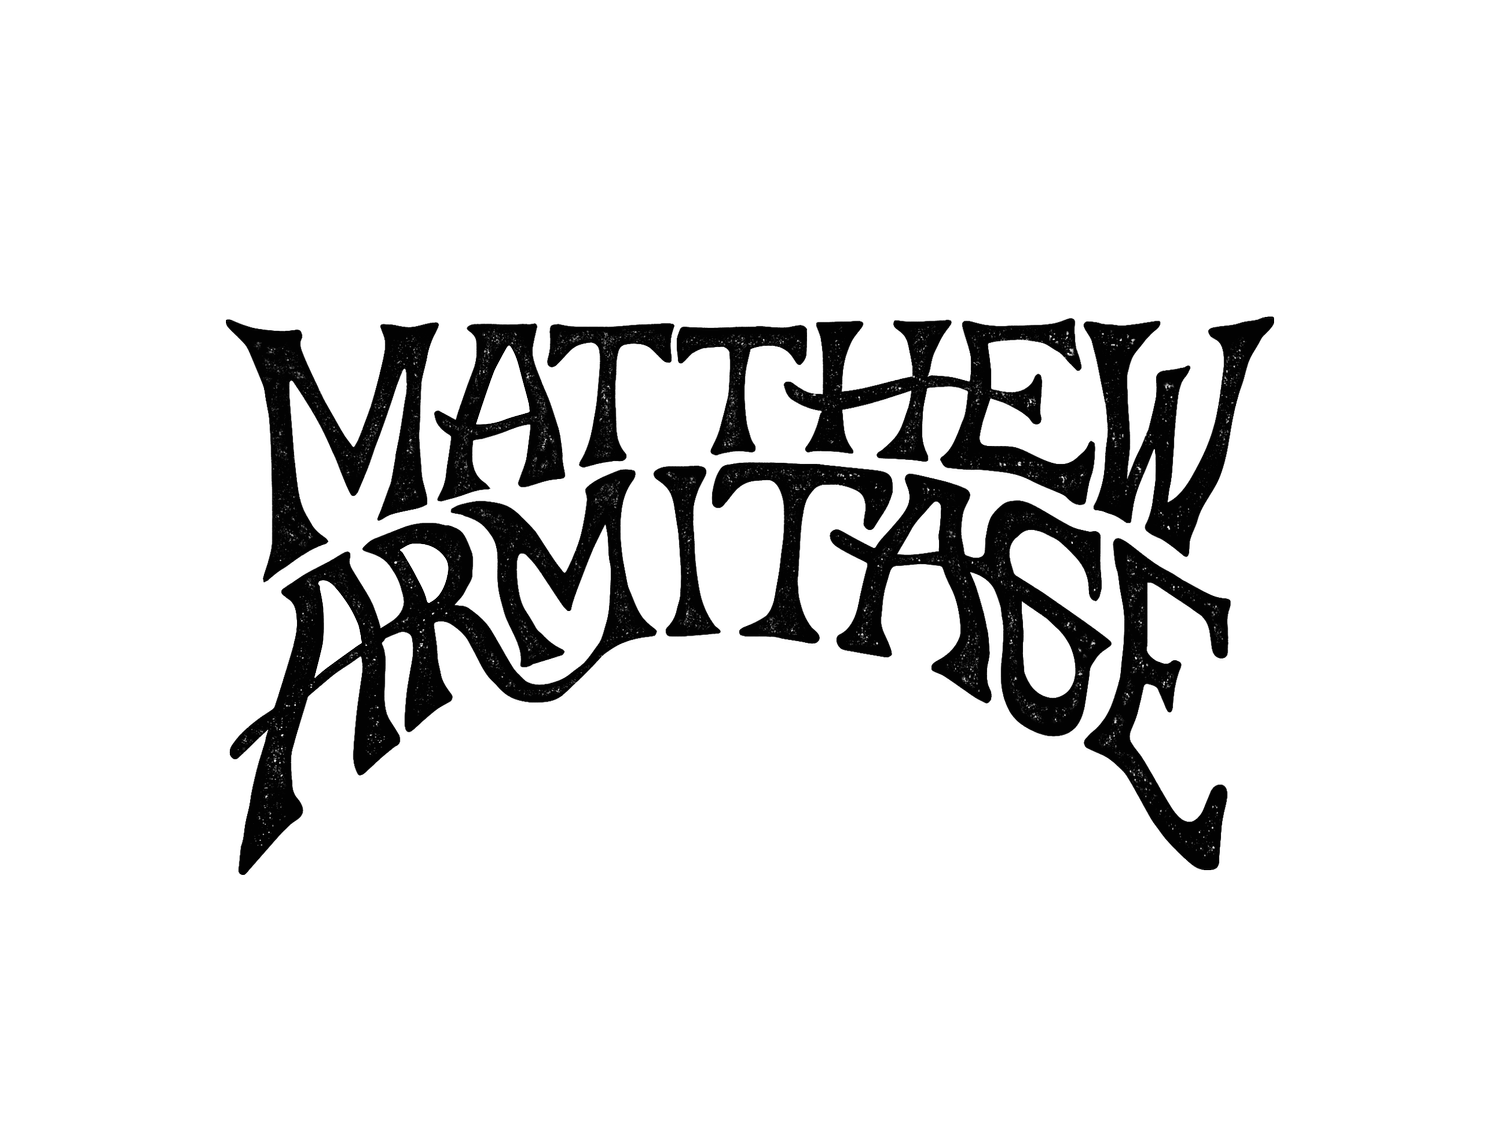 Matthew Armitage